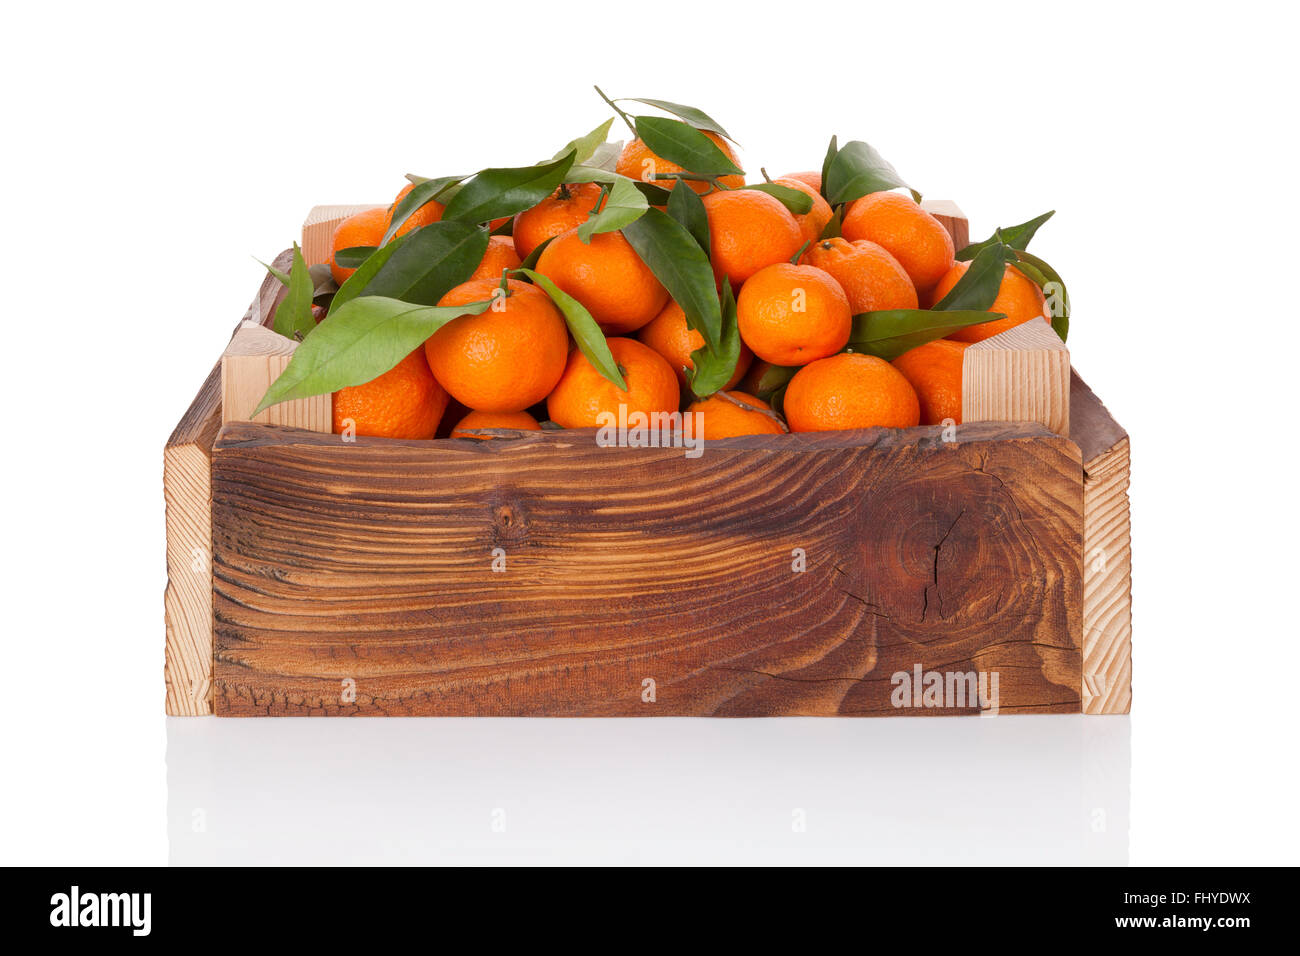 Fresche e mature mandarini con foglie verdi in casse di legno. Organici di mandarini freschi, sani mangiando frutta. Foto Stock